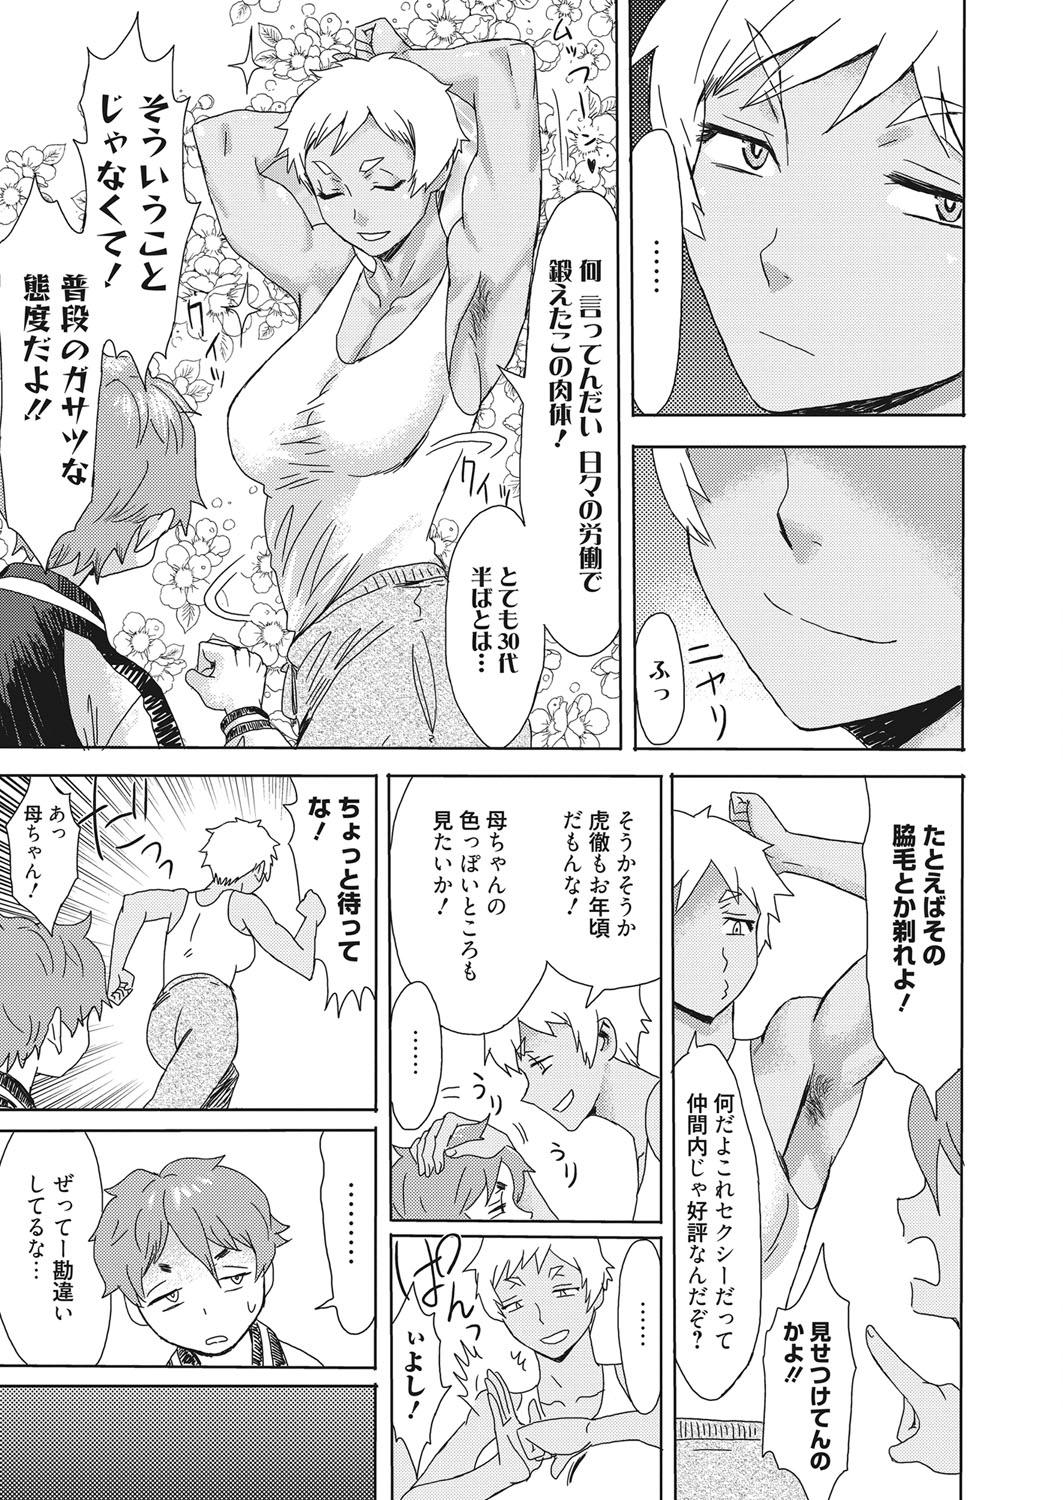 Web Manga Bangaichi Vol. 20 3